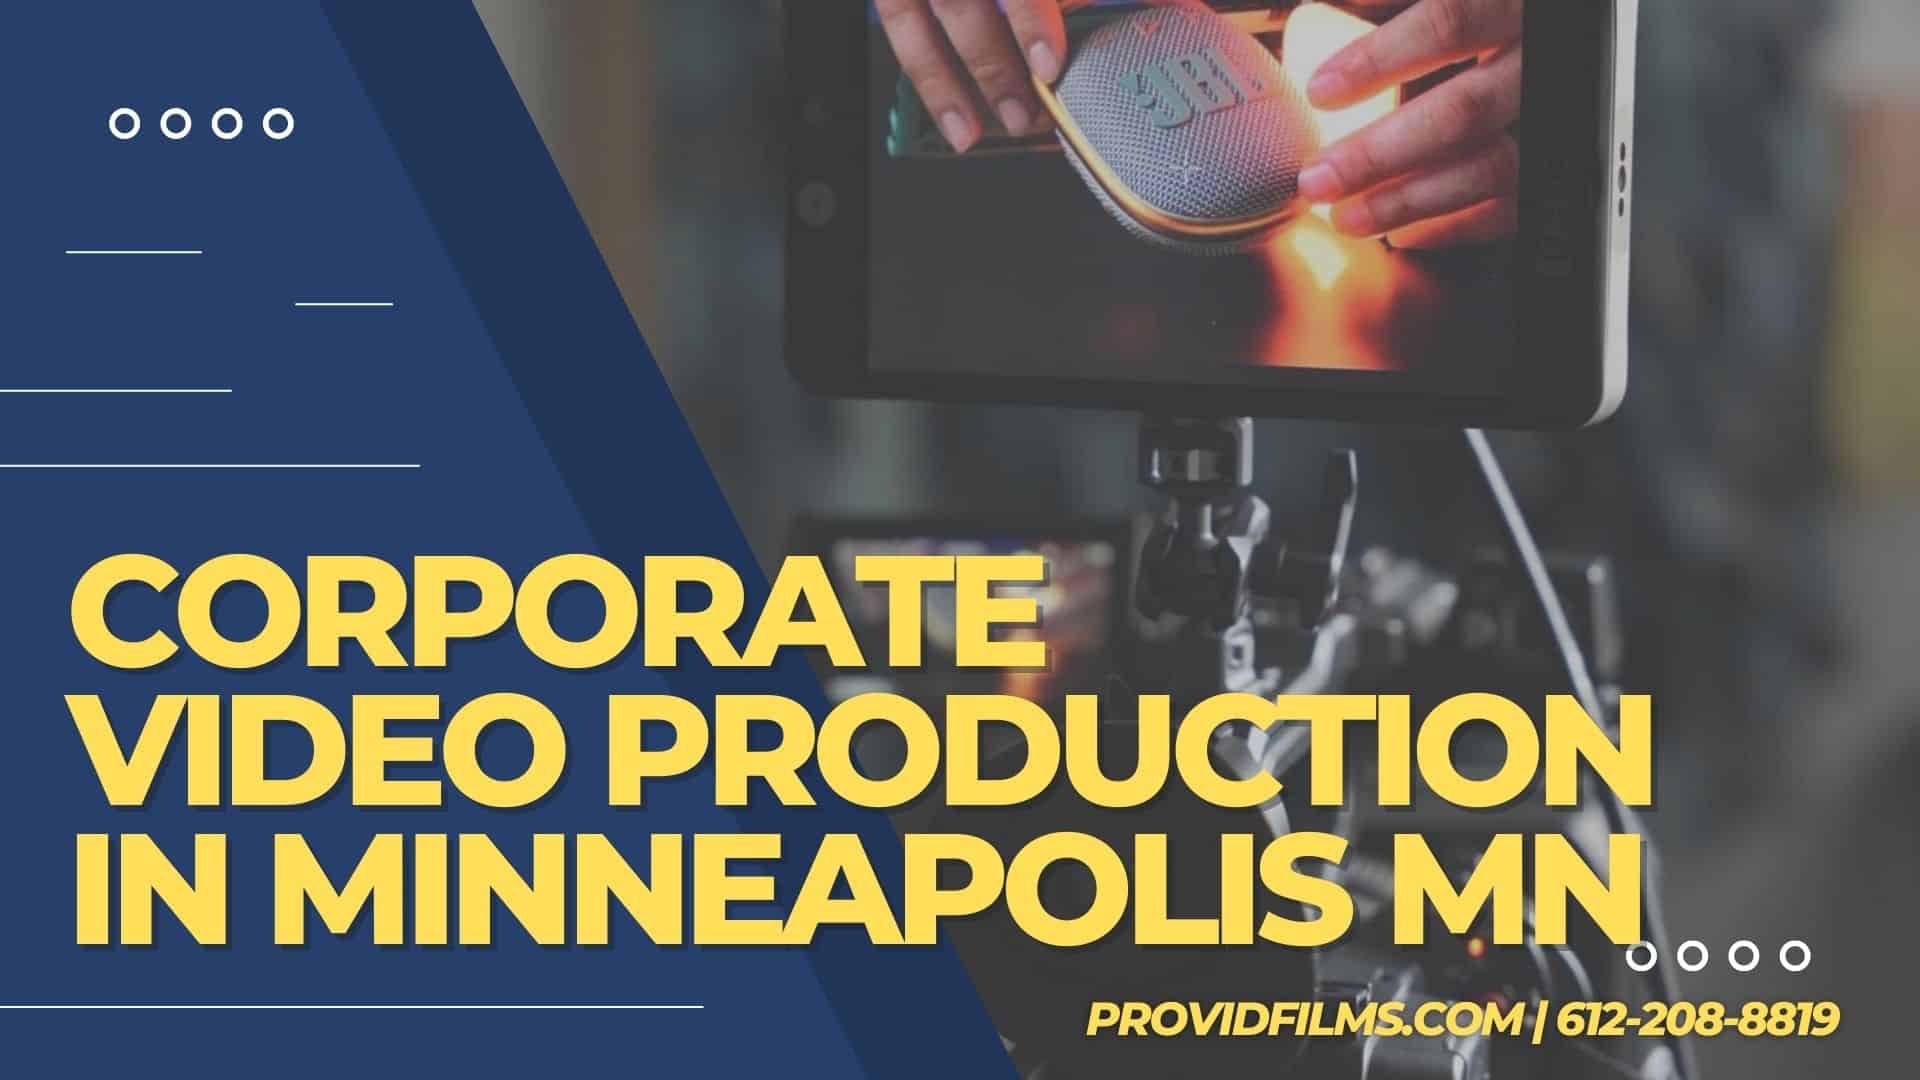 Minneapolis corporate video production company in Minneapolis MN - Provid Films